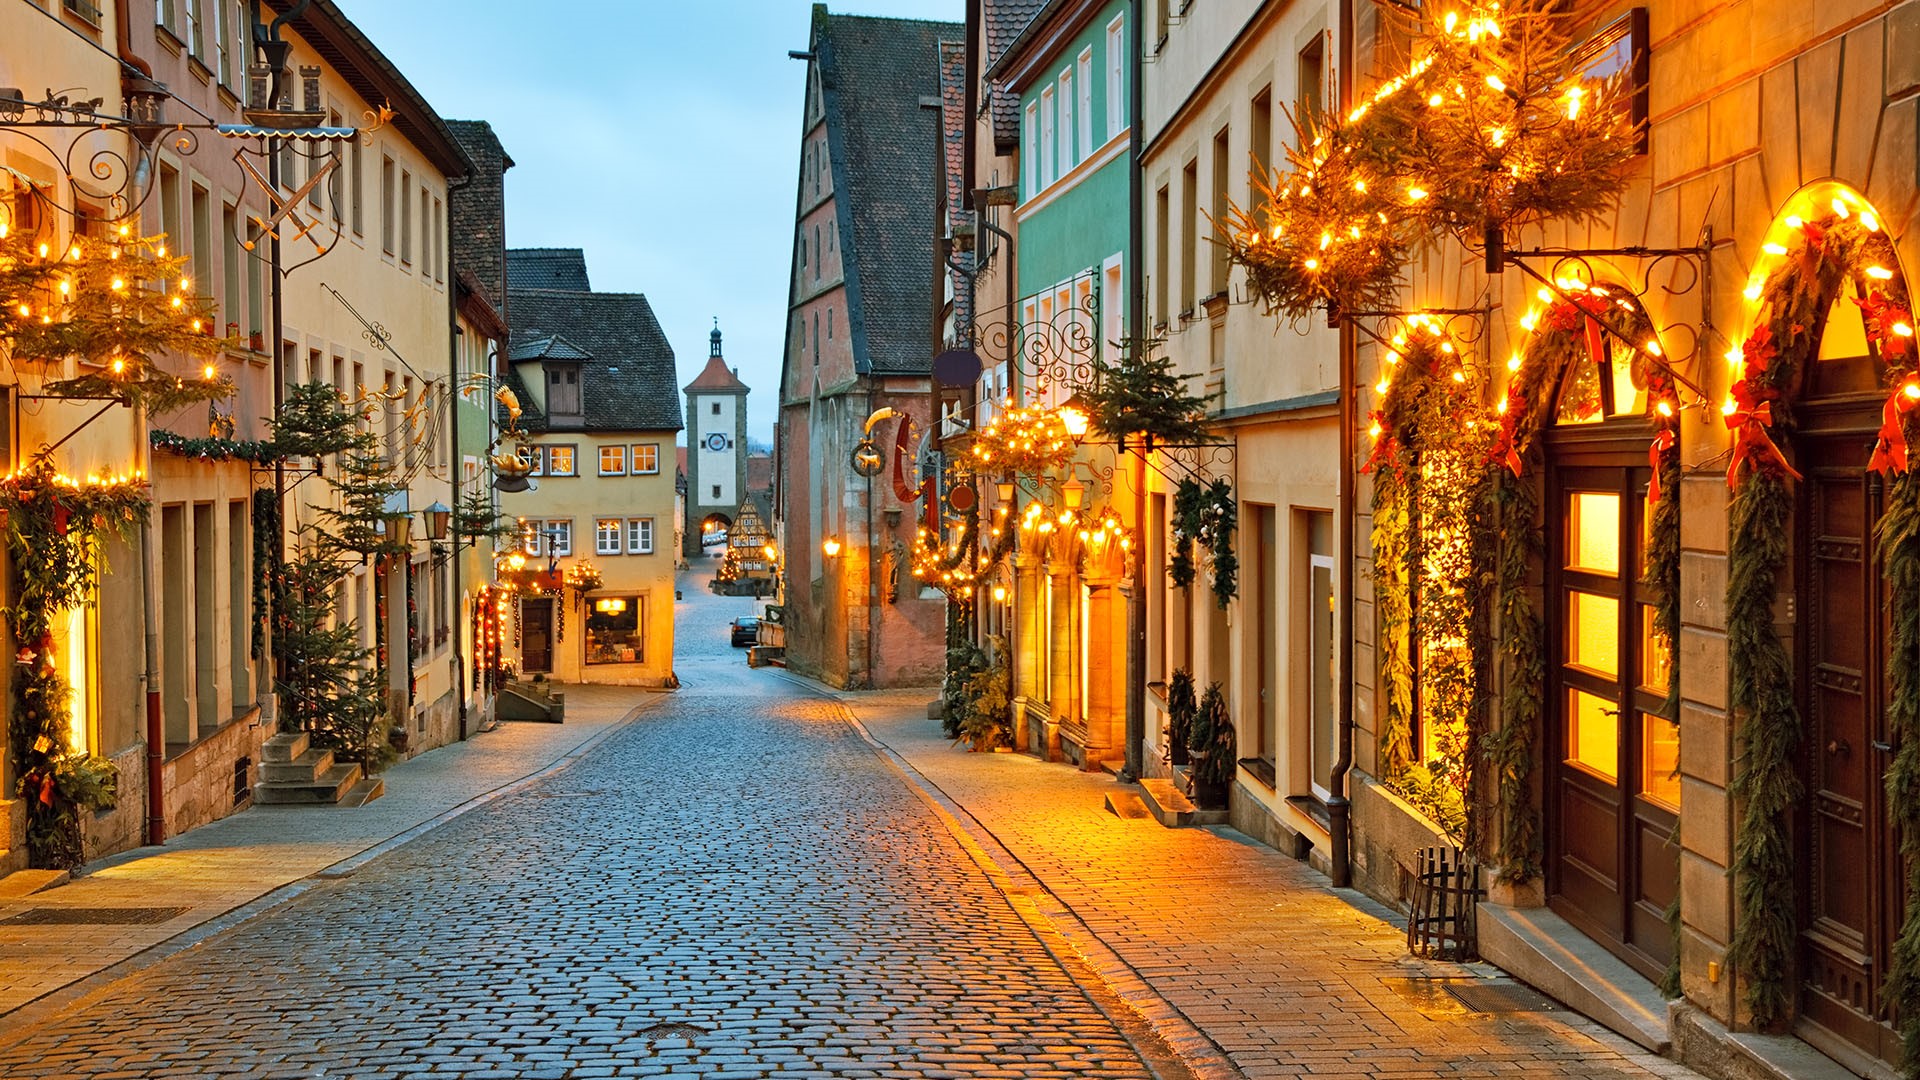 Rothenburg ob der Tauber, Franconia region of Bavaria, Germany | Windows 10  Spotlight Images